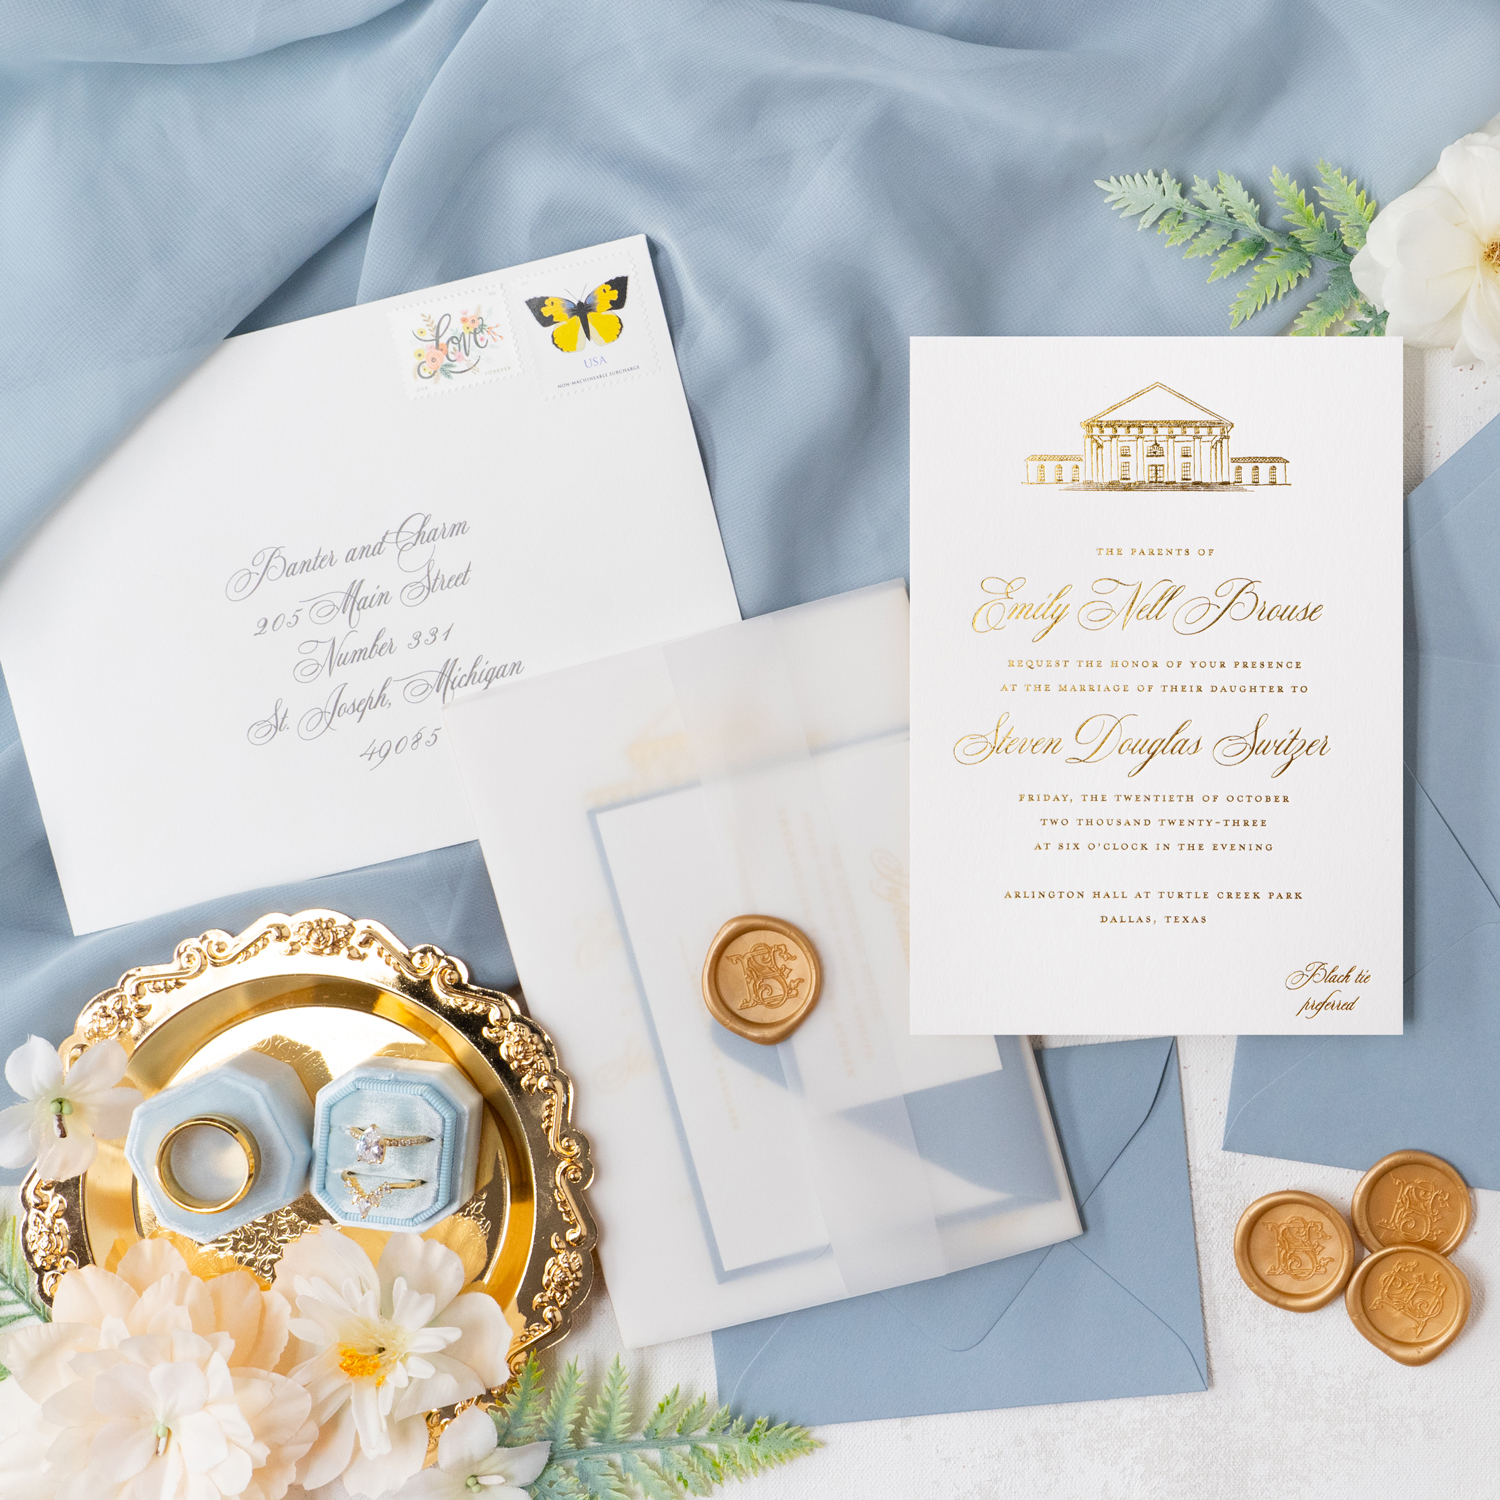 Arlington Hall Wedding invitations